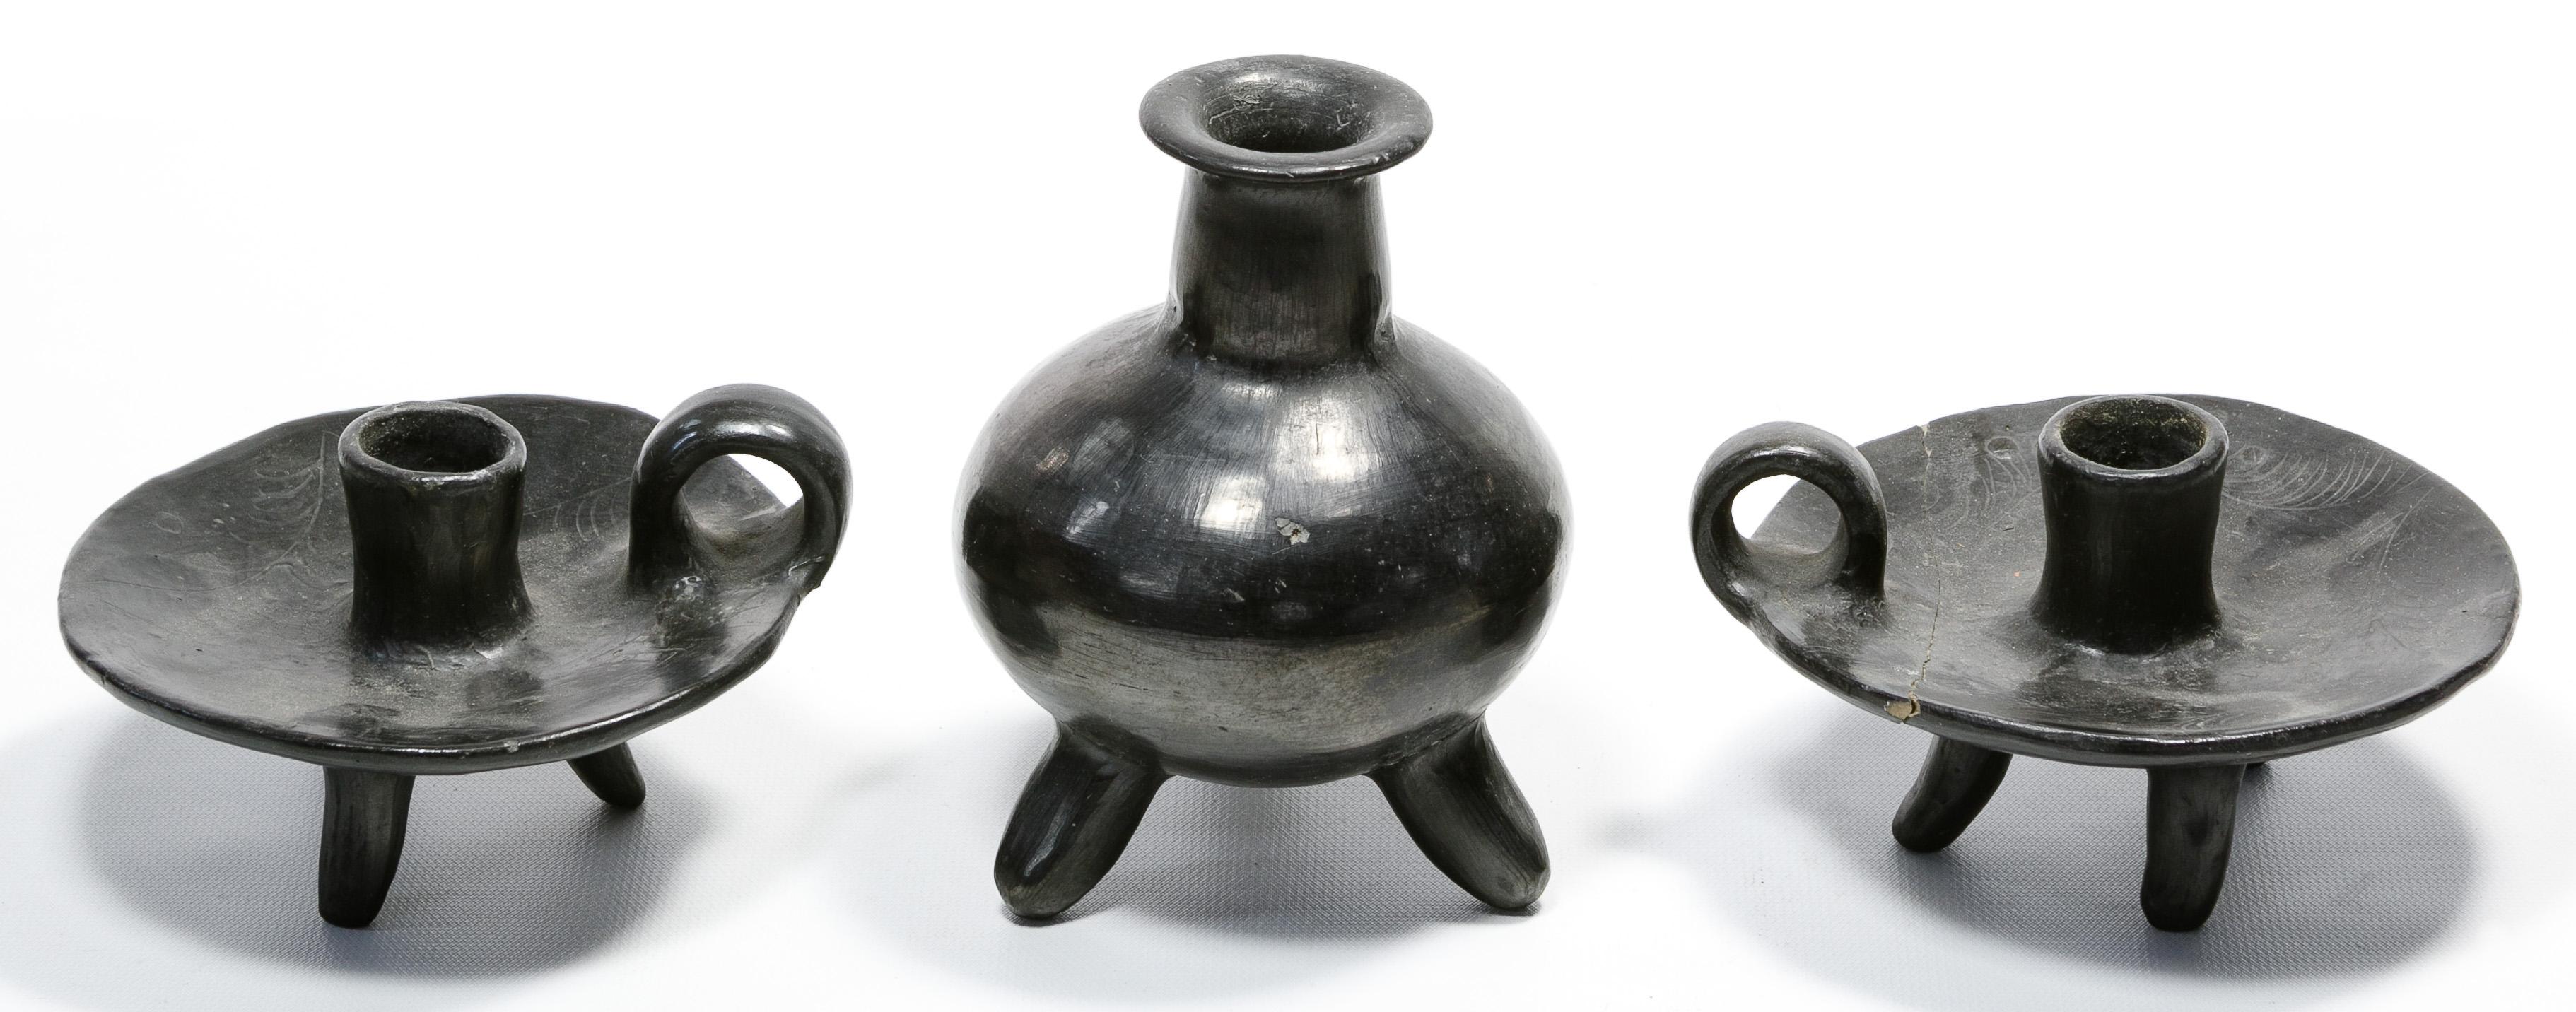 Mexican Oaxaca Black Pottery